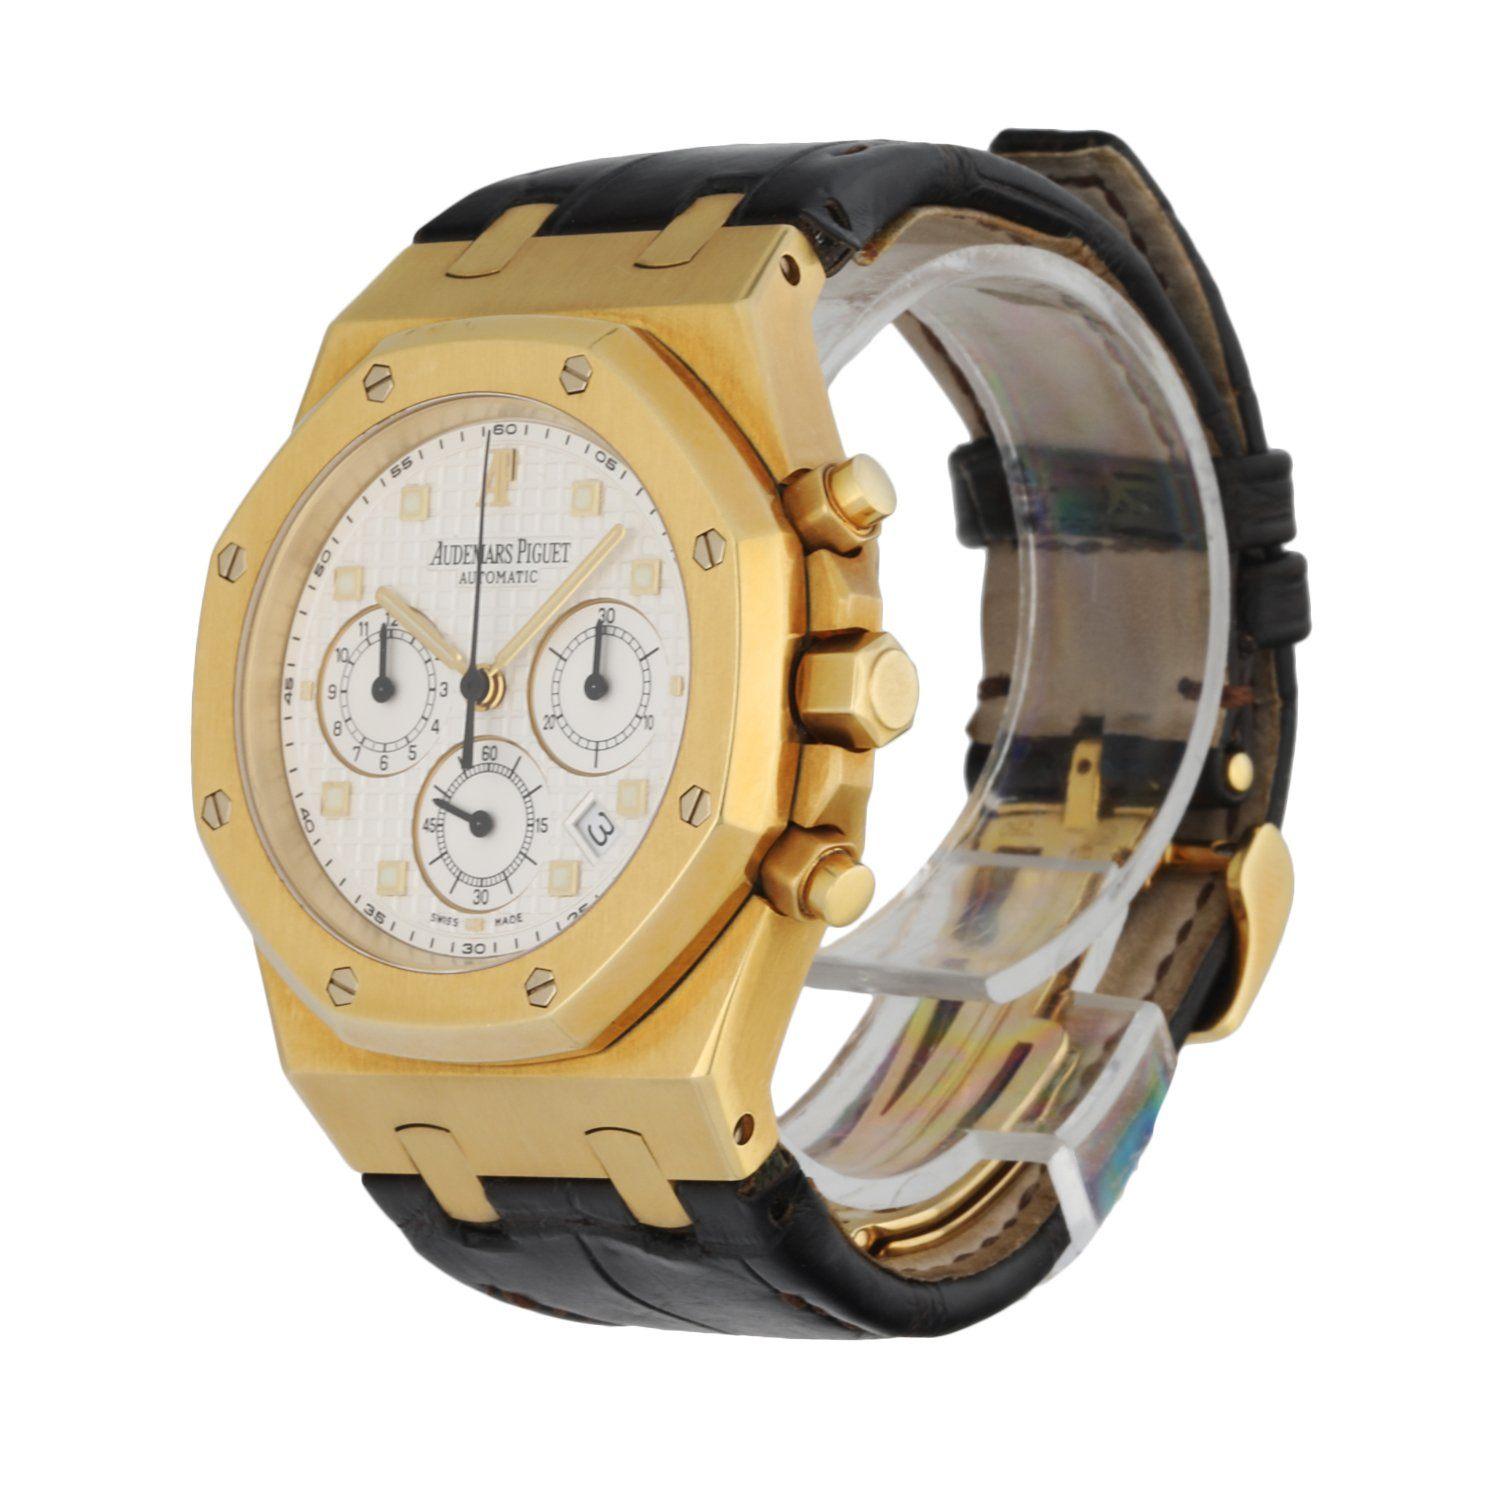 Audemars Piguet Royal Oak 26022BA men's watch.39mmÂ yellow gold case and octagonal shaped bezel.Â WhiteÂ dial with an engraved tapestry 